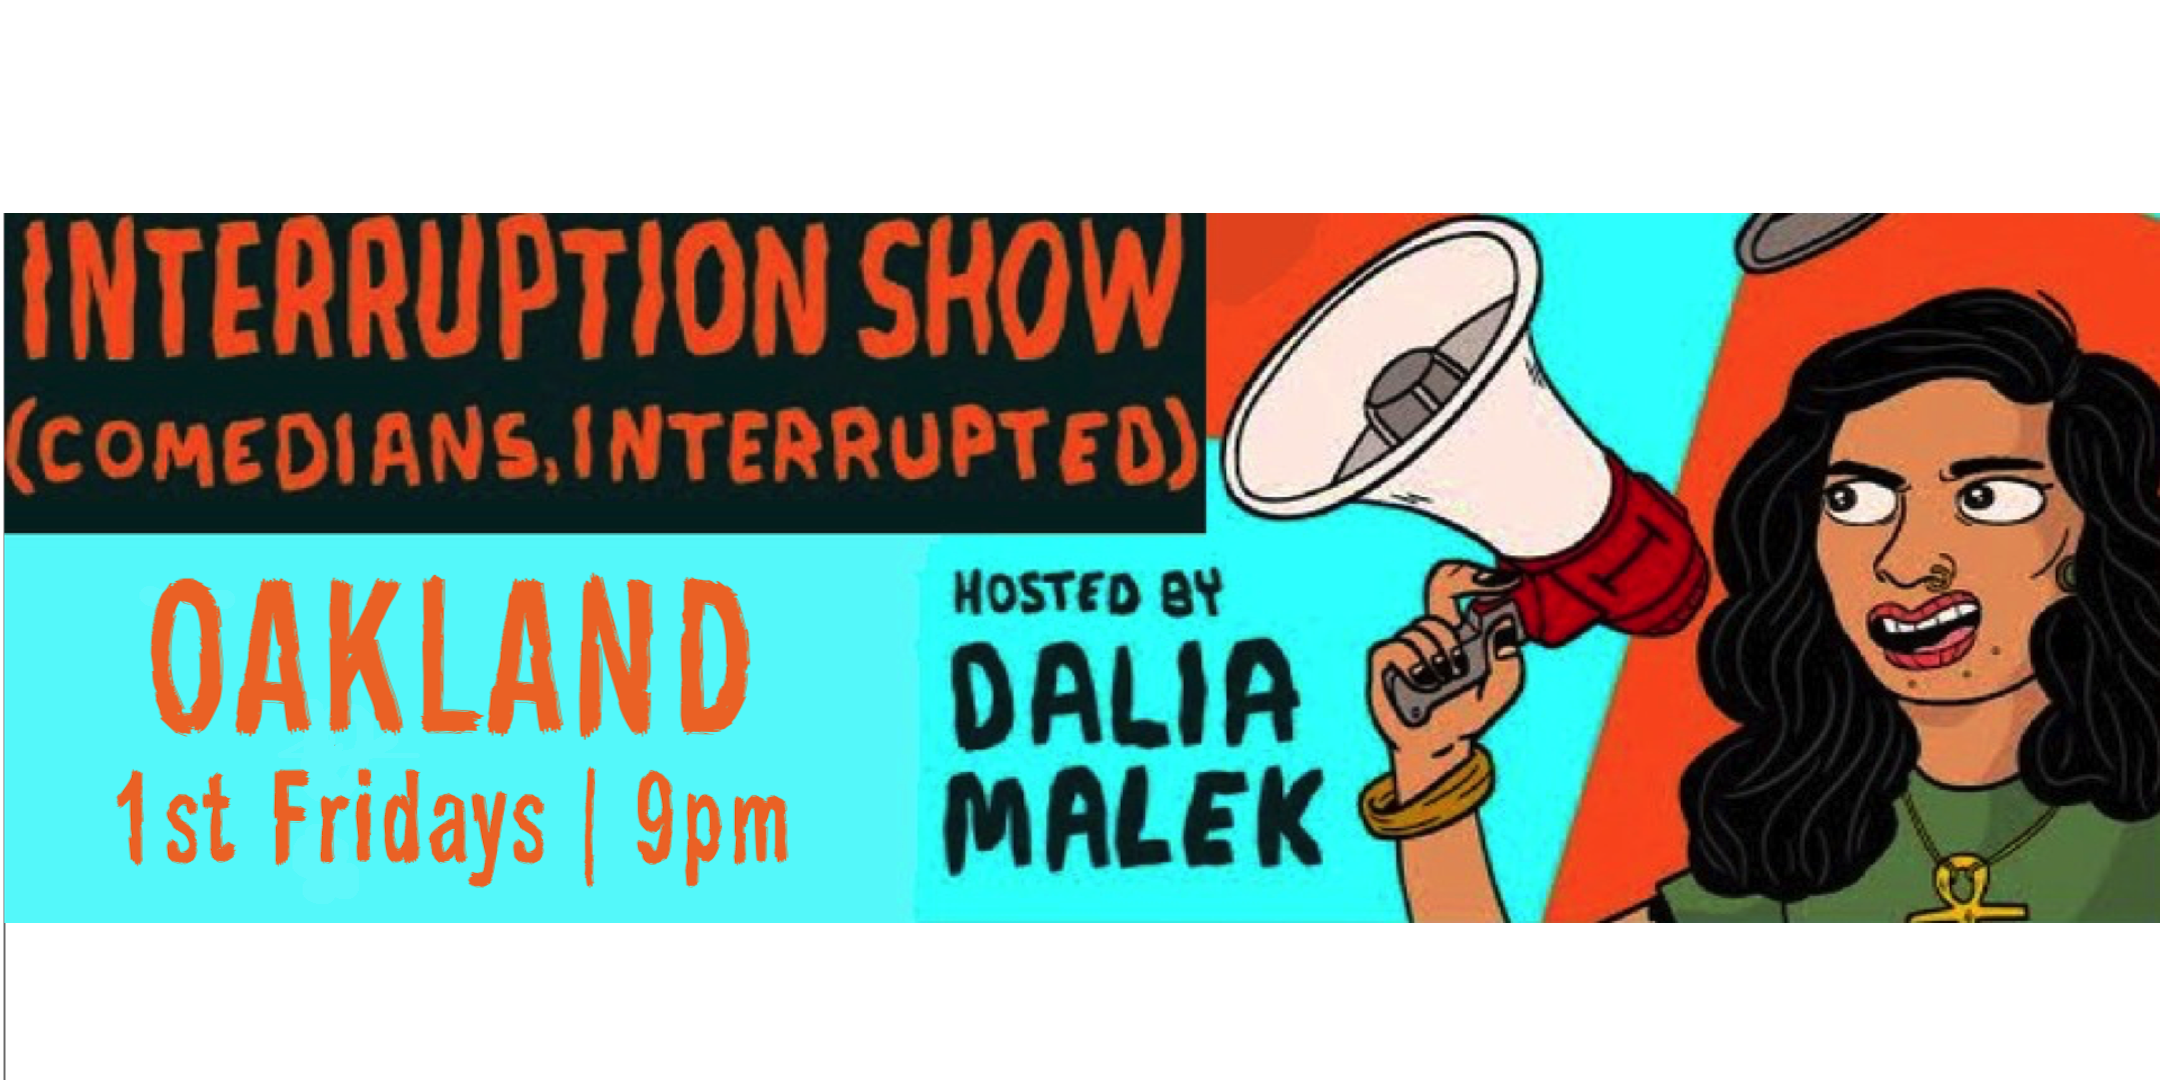 Interruption Show (comedians, interrupted)